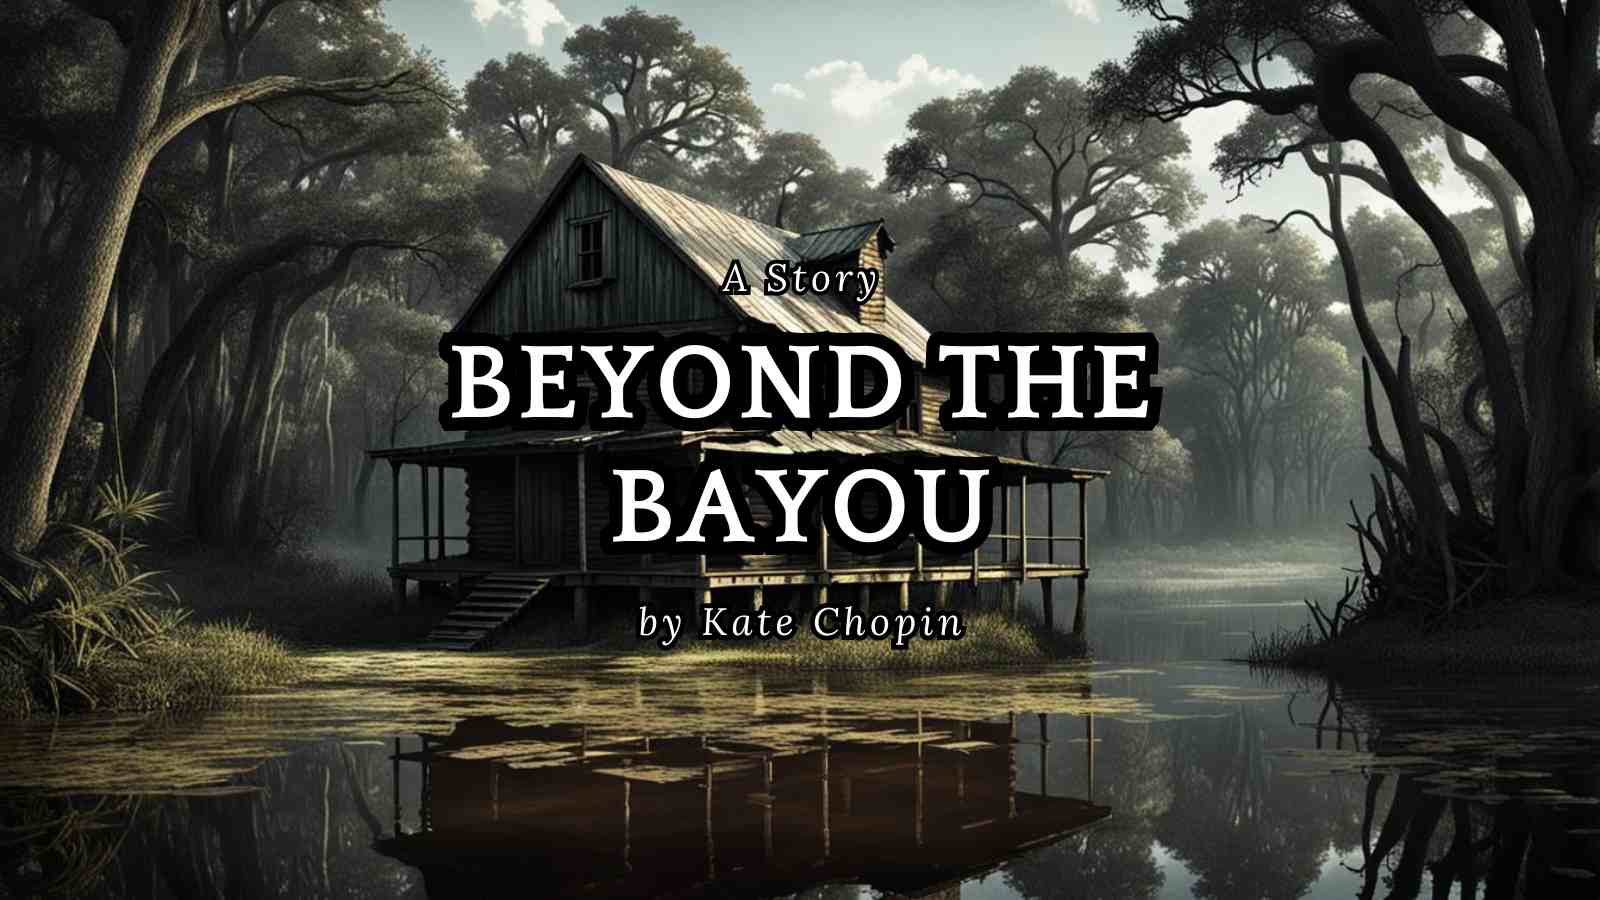 Beyond the bayou